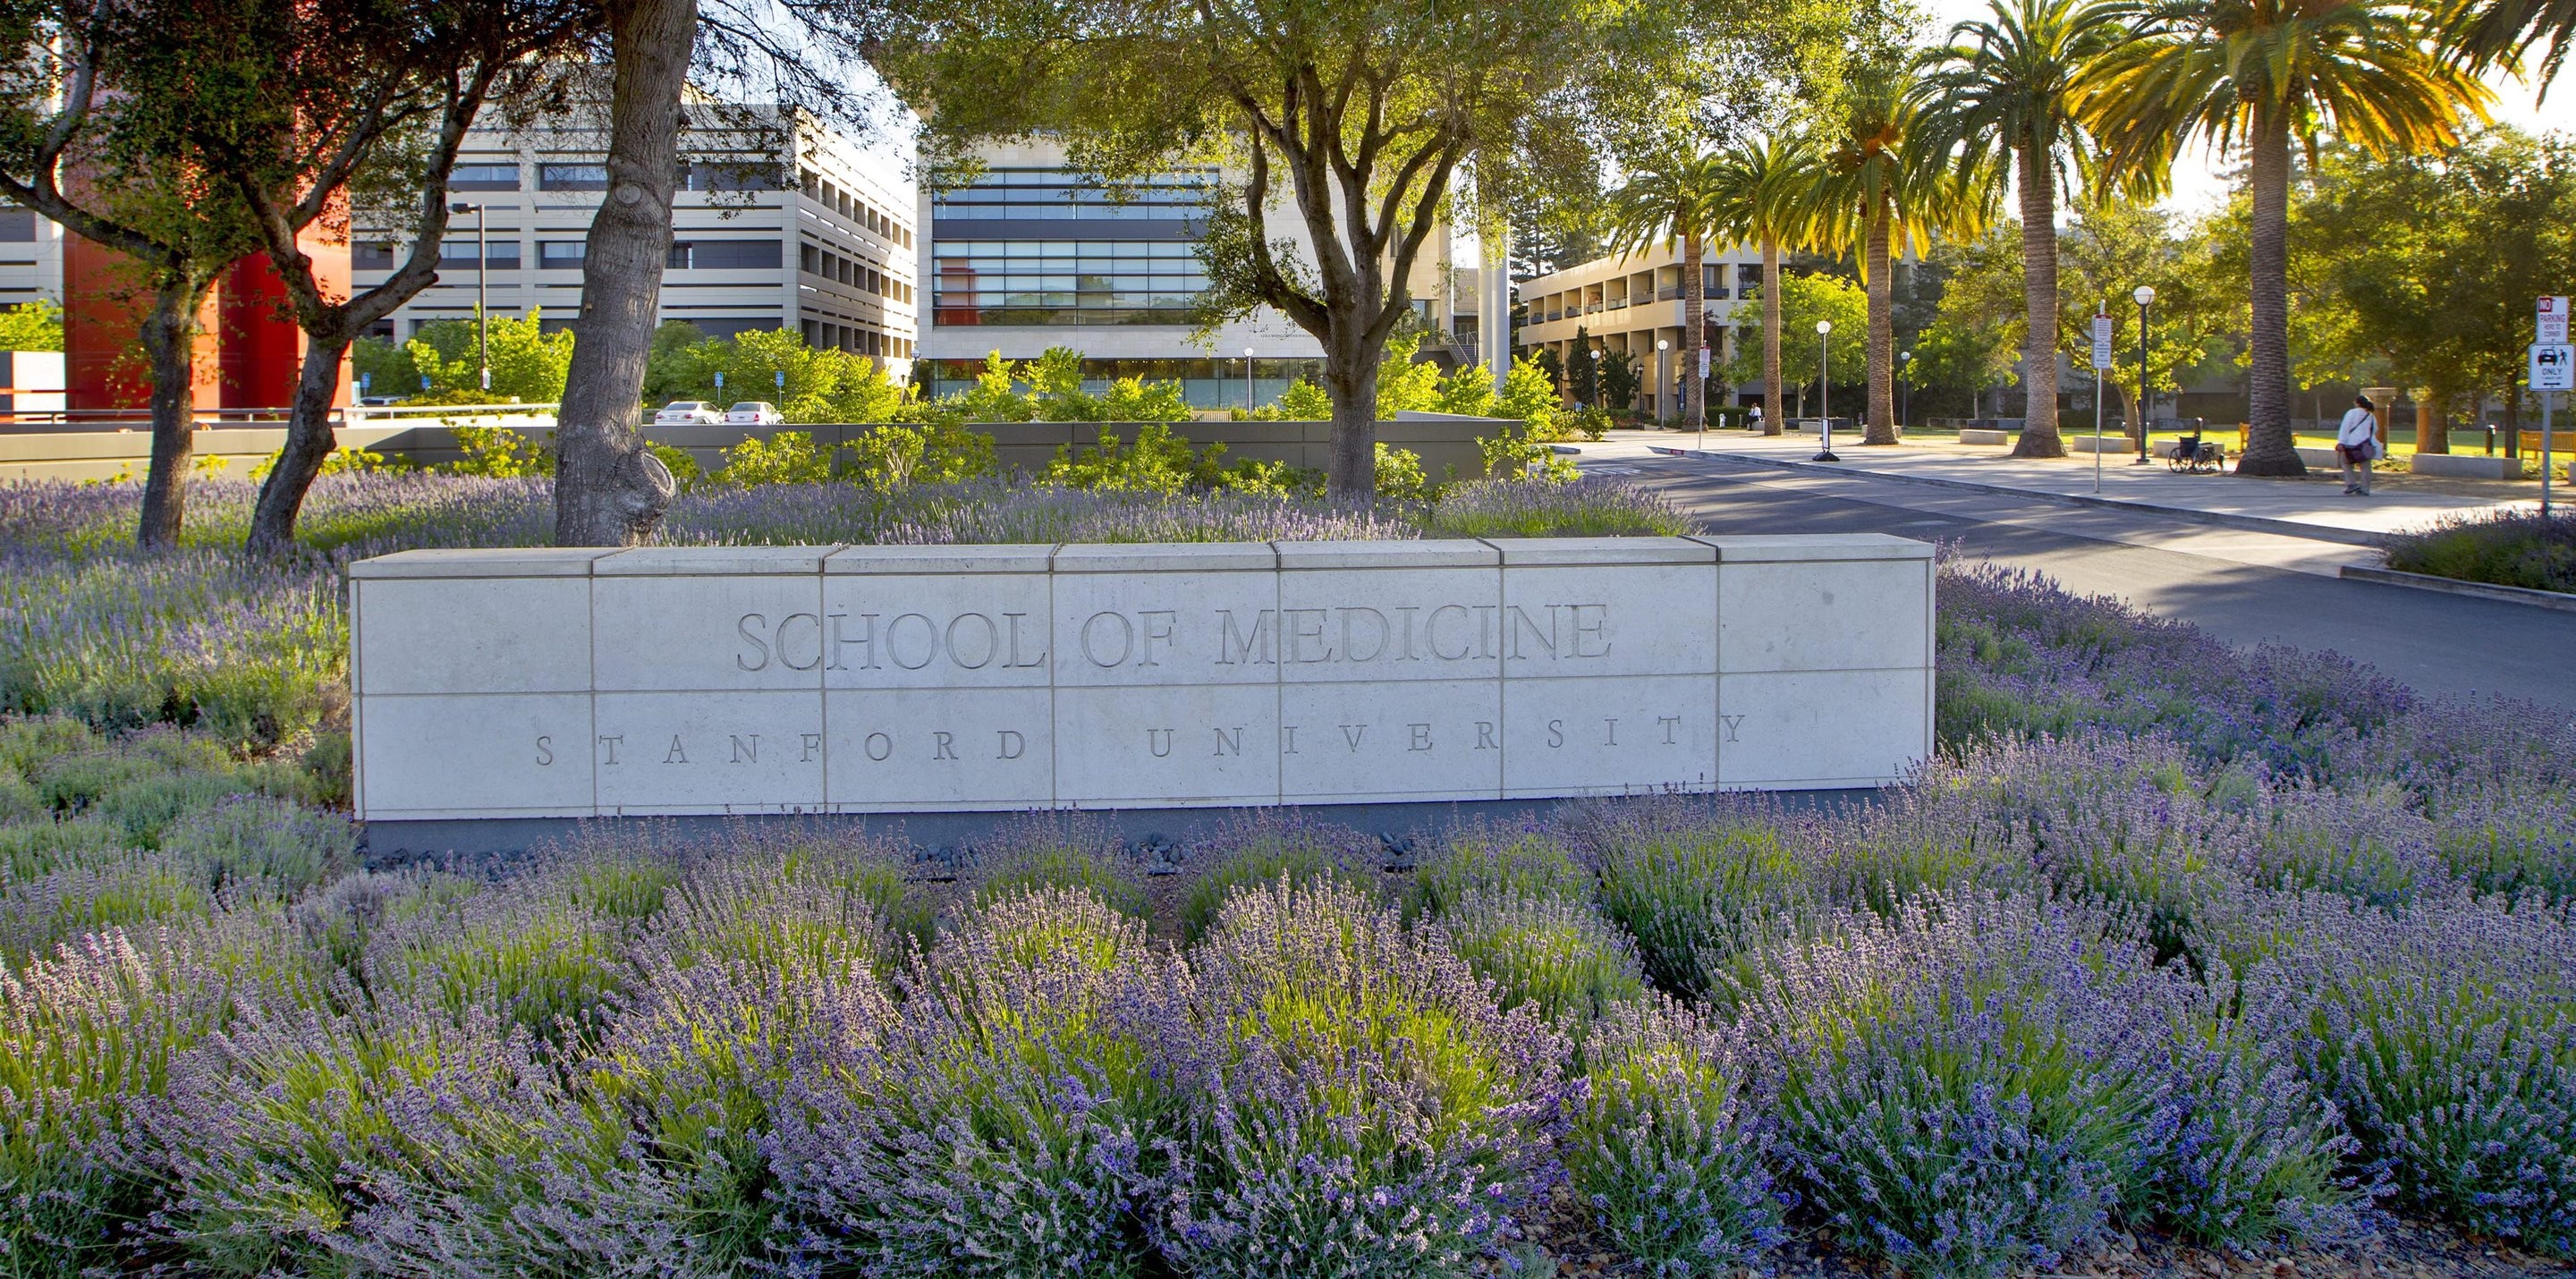 Stanford University School of Medicine sign on campus